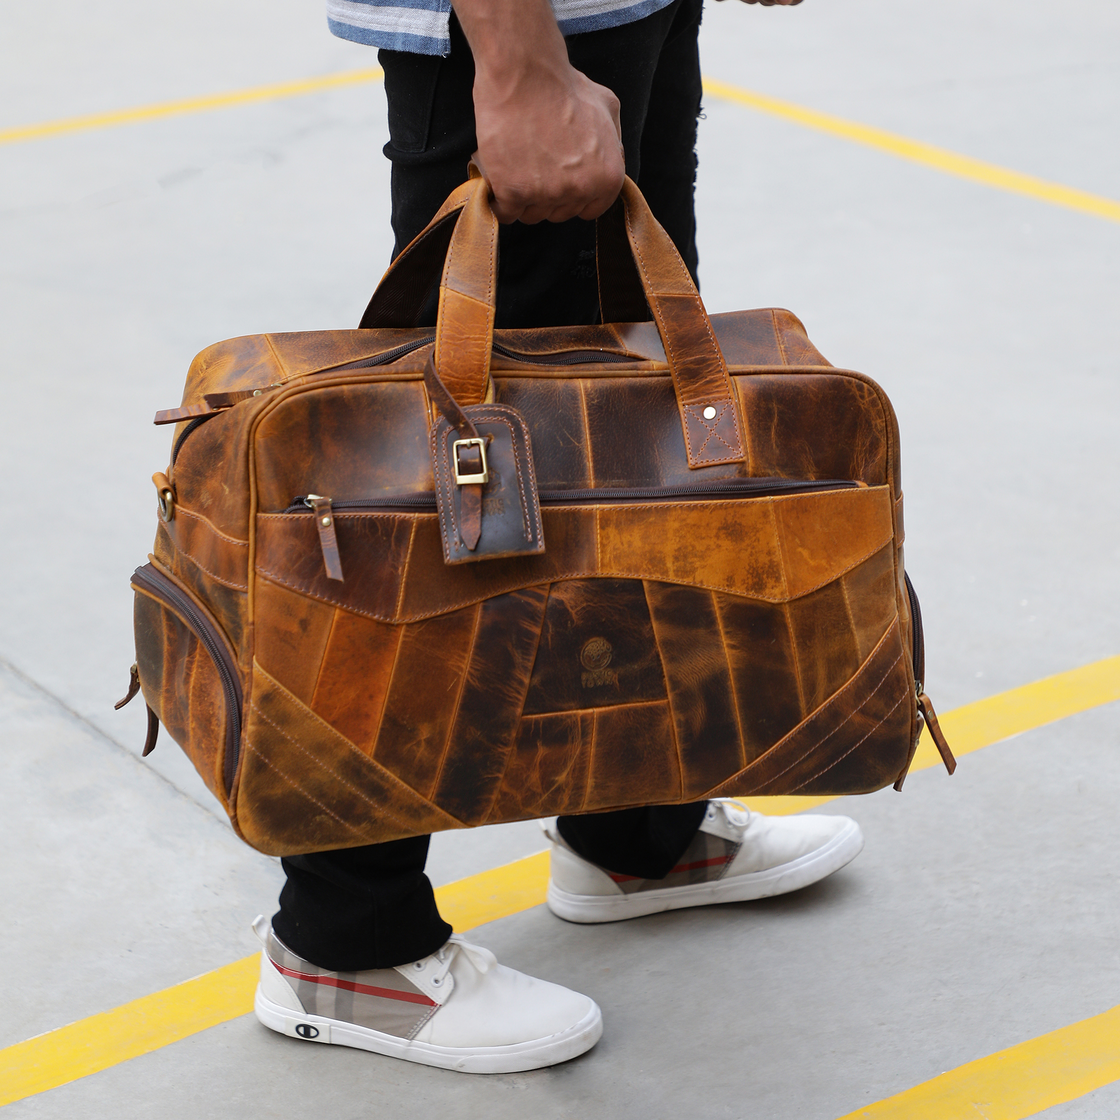 John Leather Travel Duffle Bag